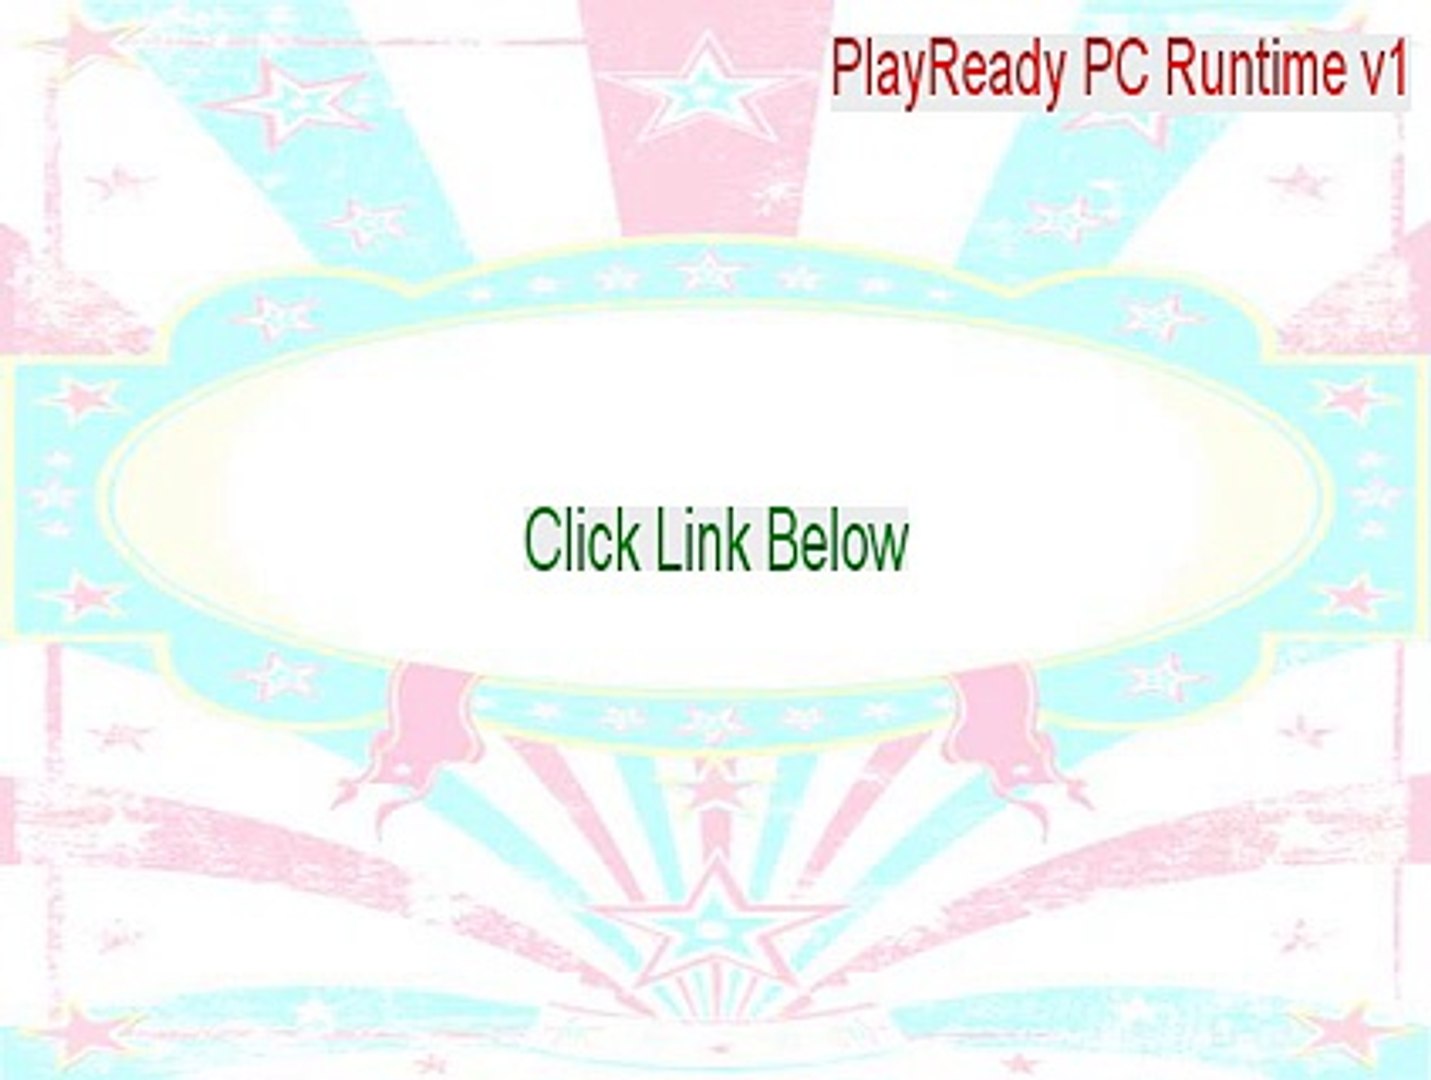 playready pc runtime x64